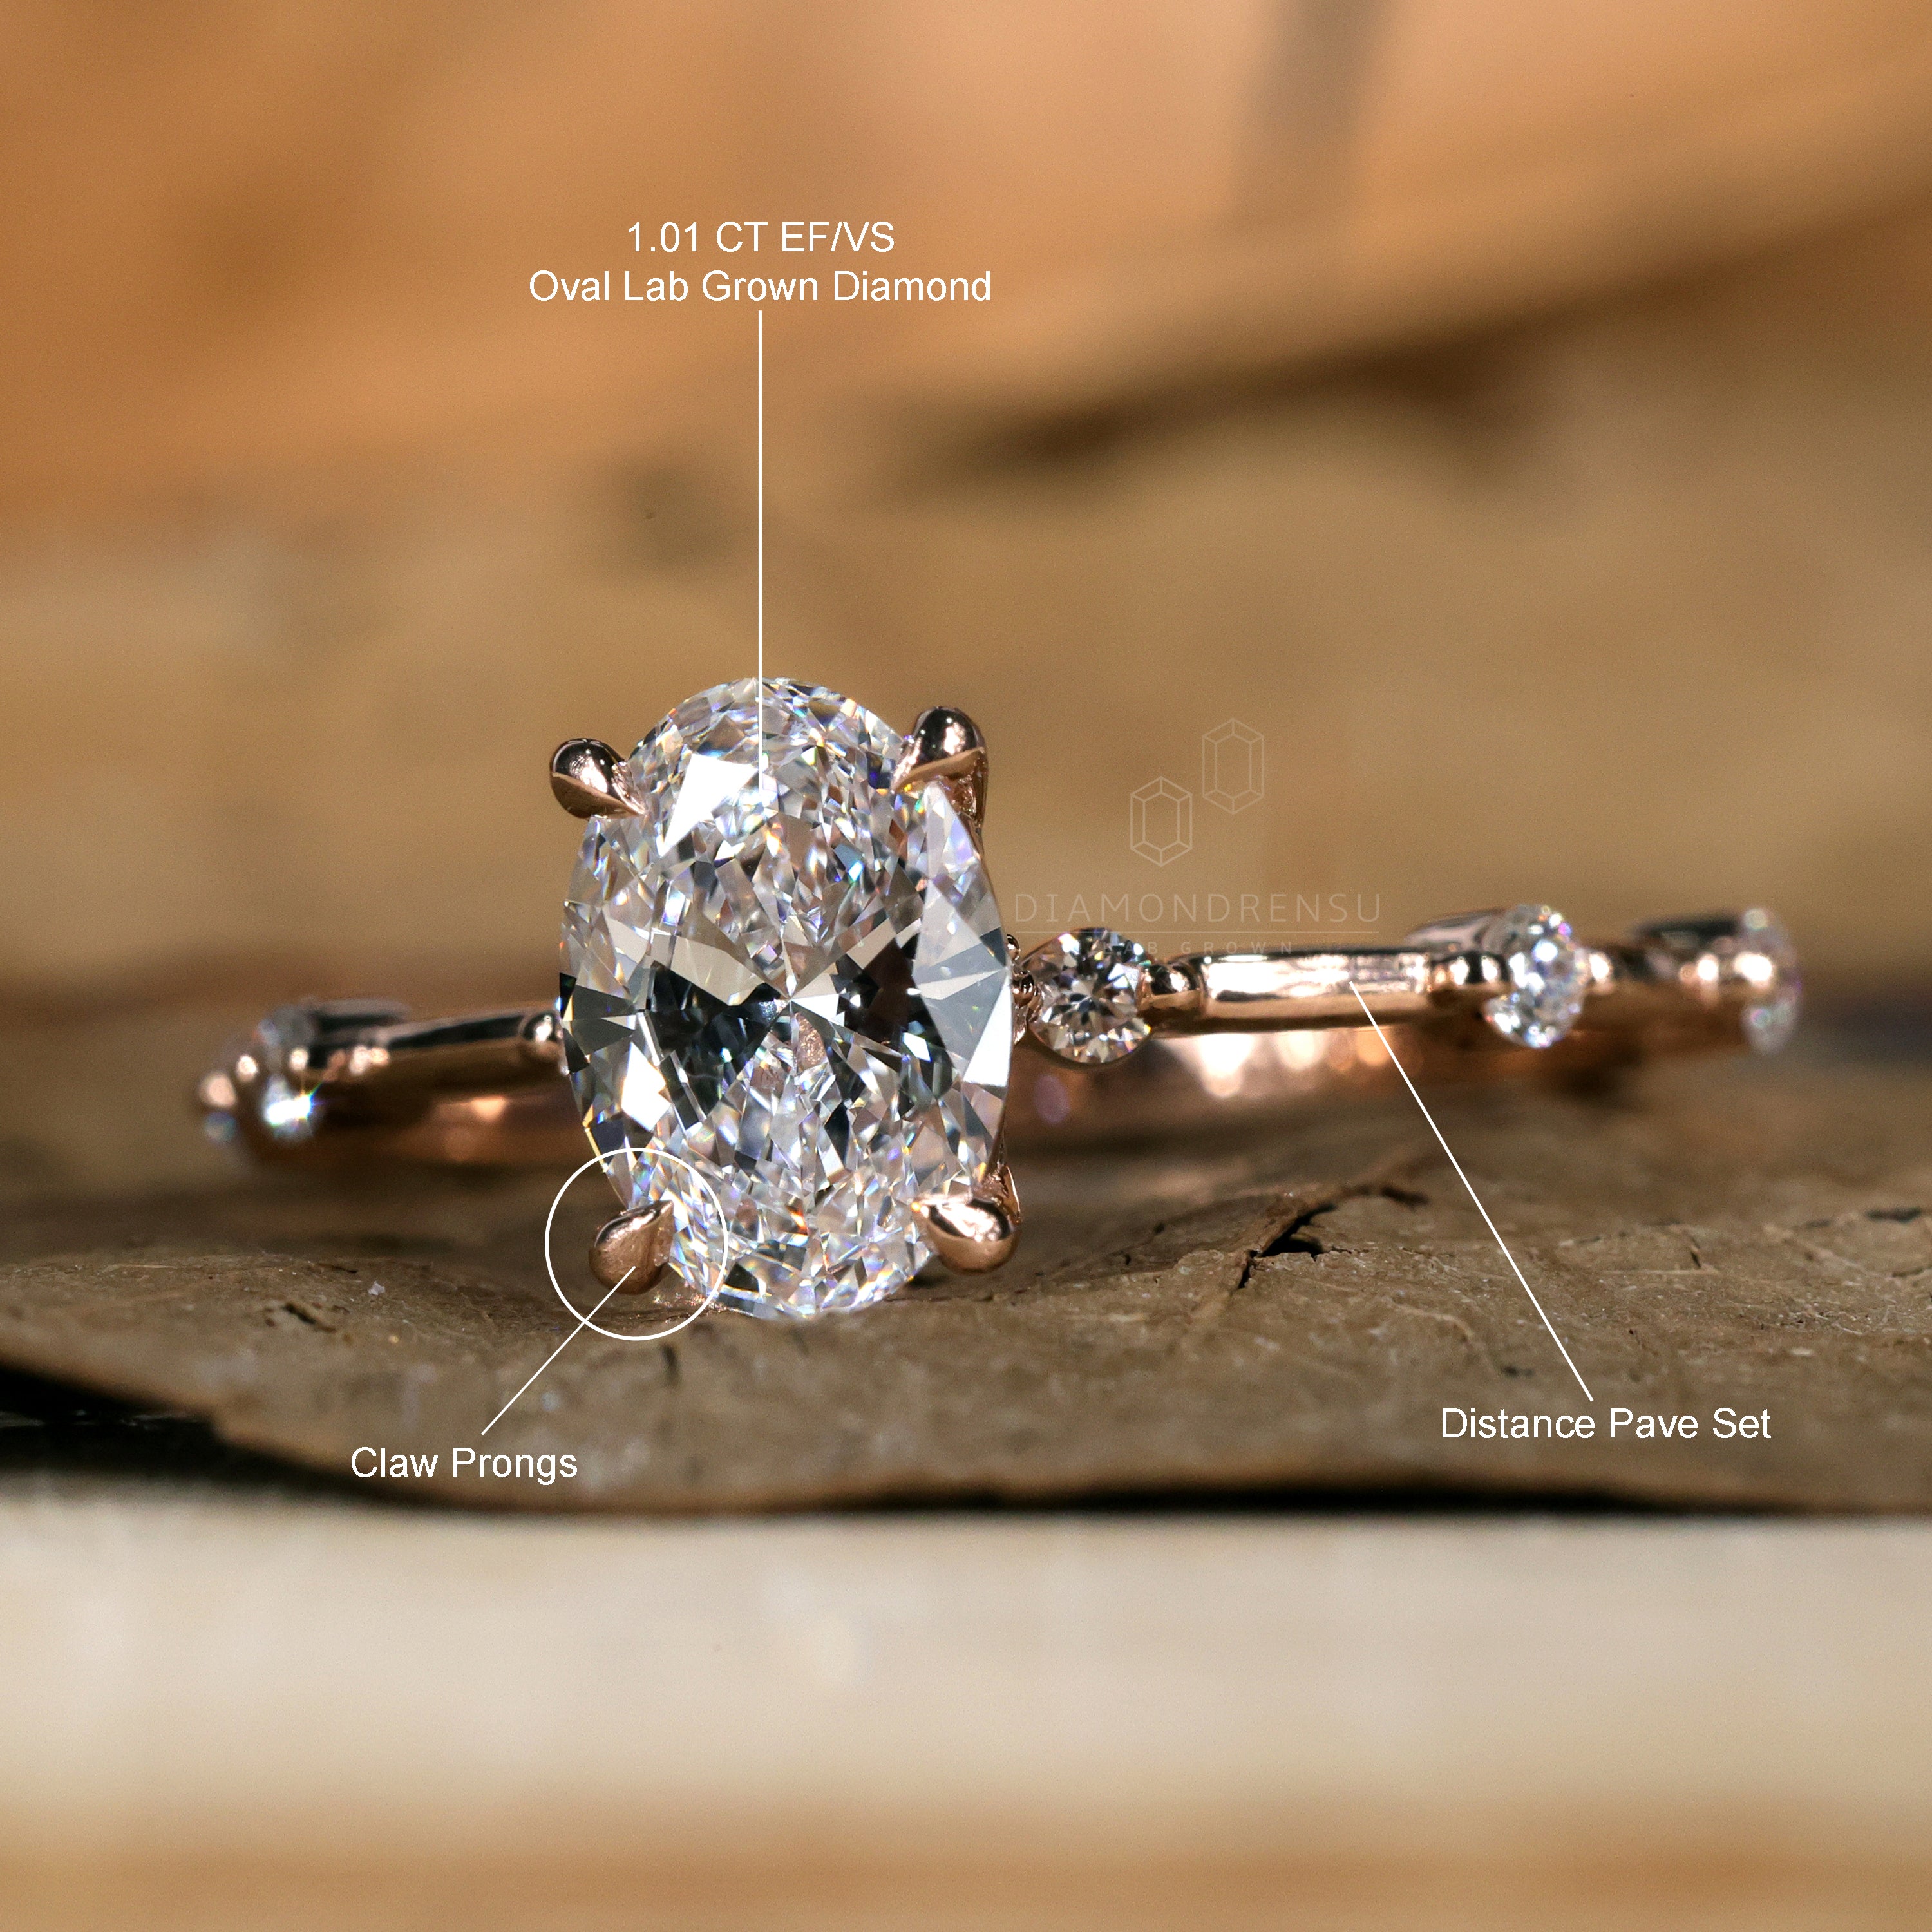 oval cut diamond jewelry - diamondrensu